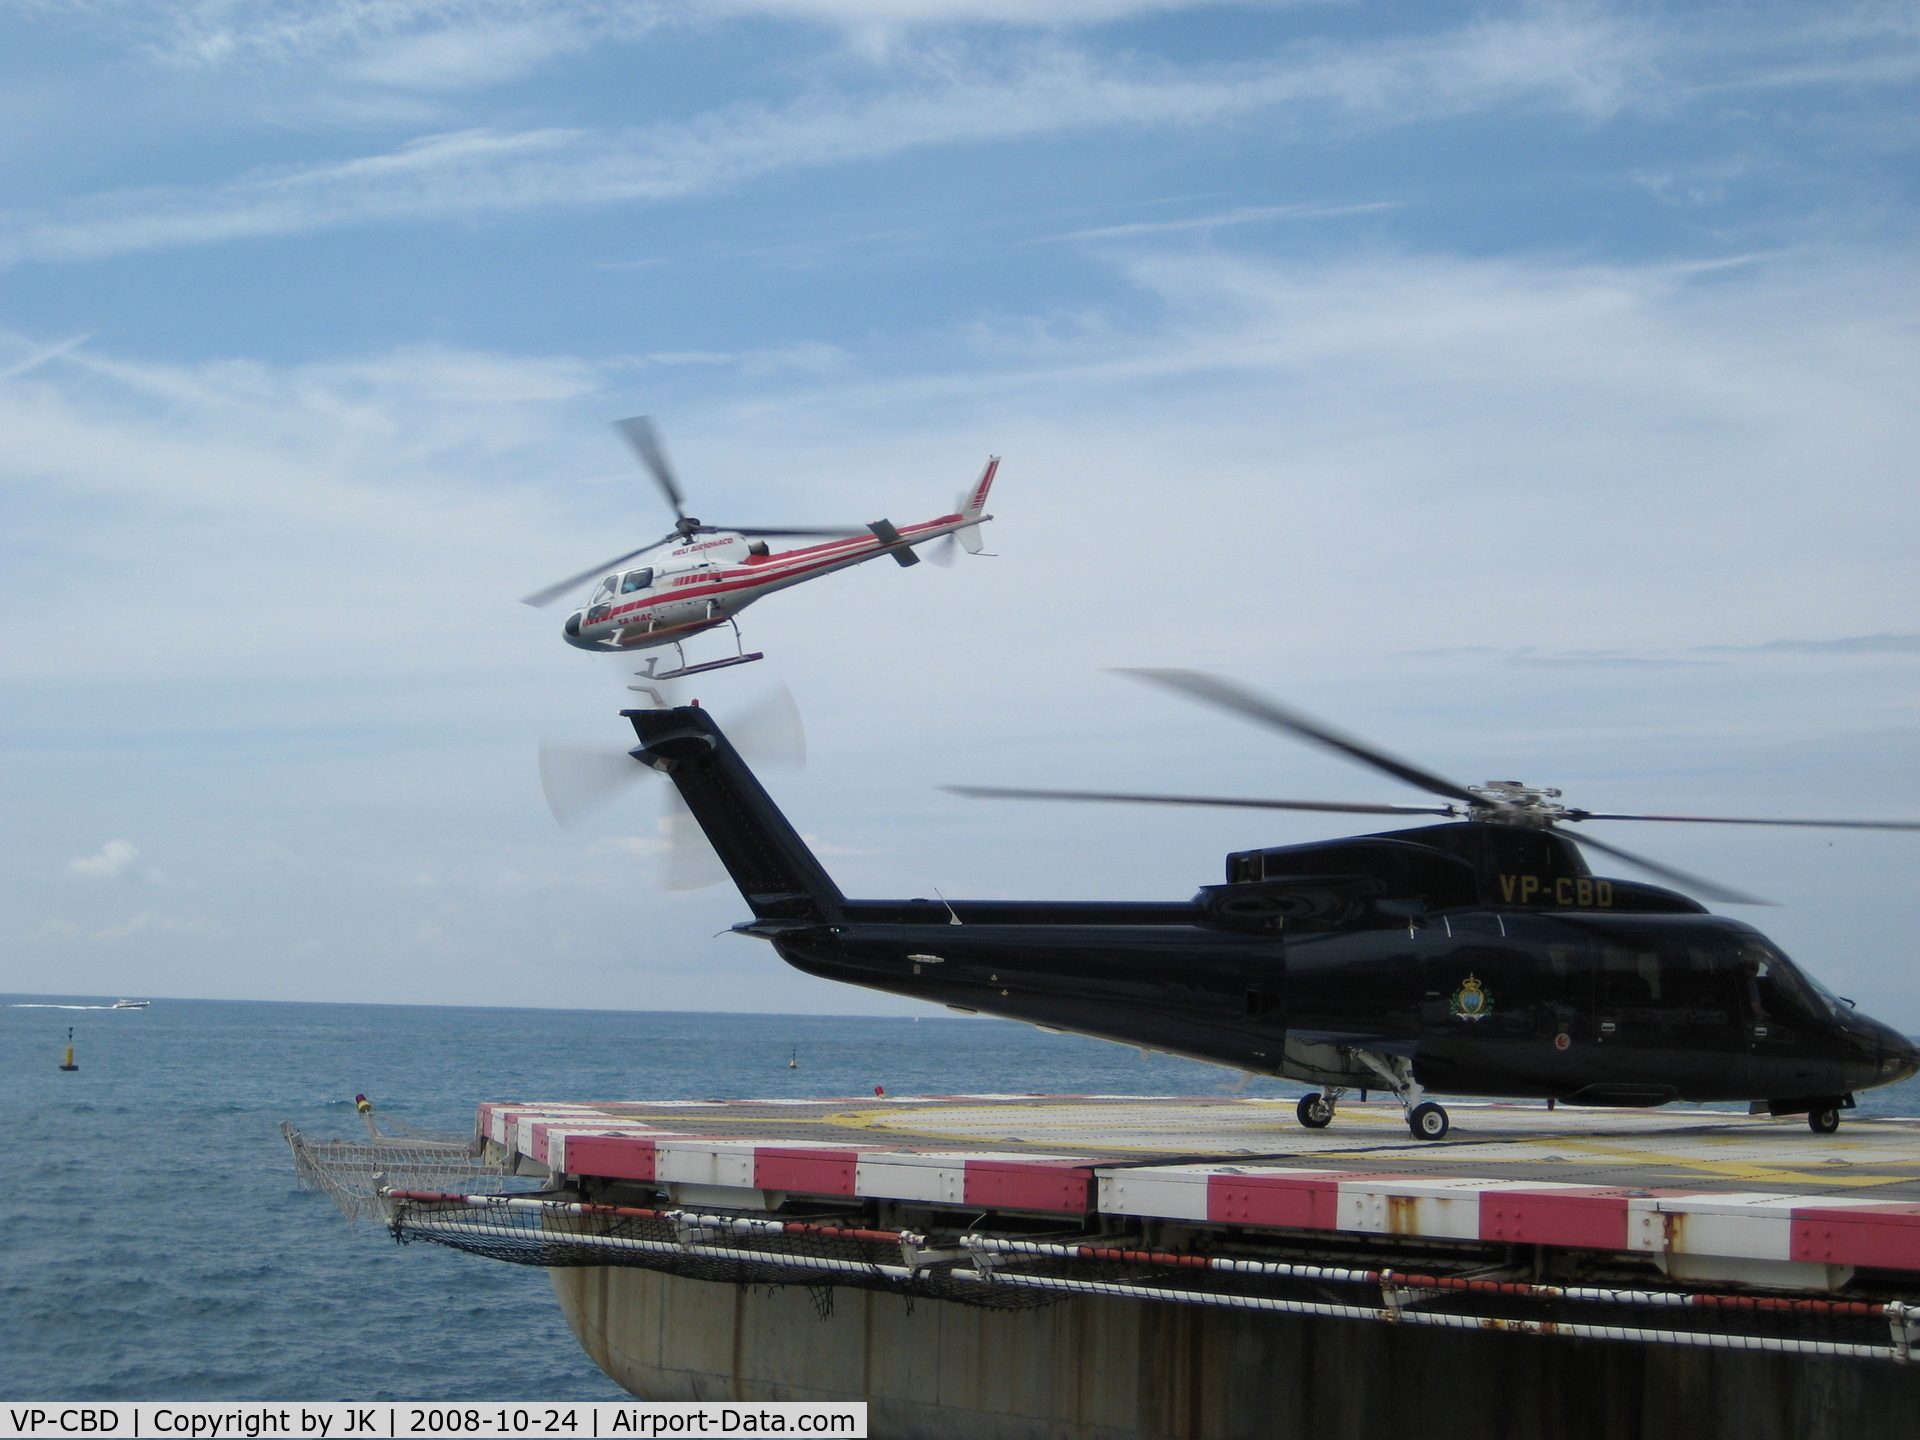 VP-CBD, Sikorsky S-76C C/N 760514, As seen at heliport Monaco, wearing the coat of arms of San Marino.